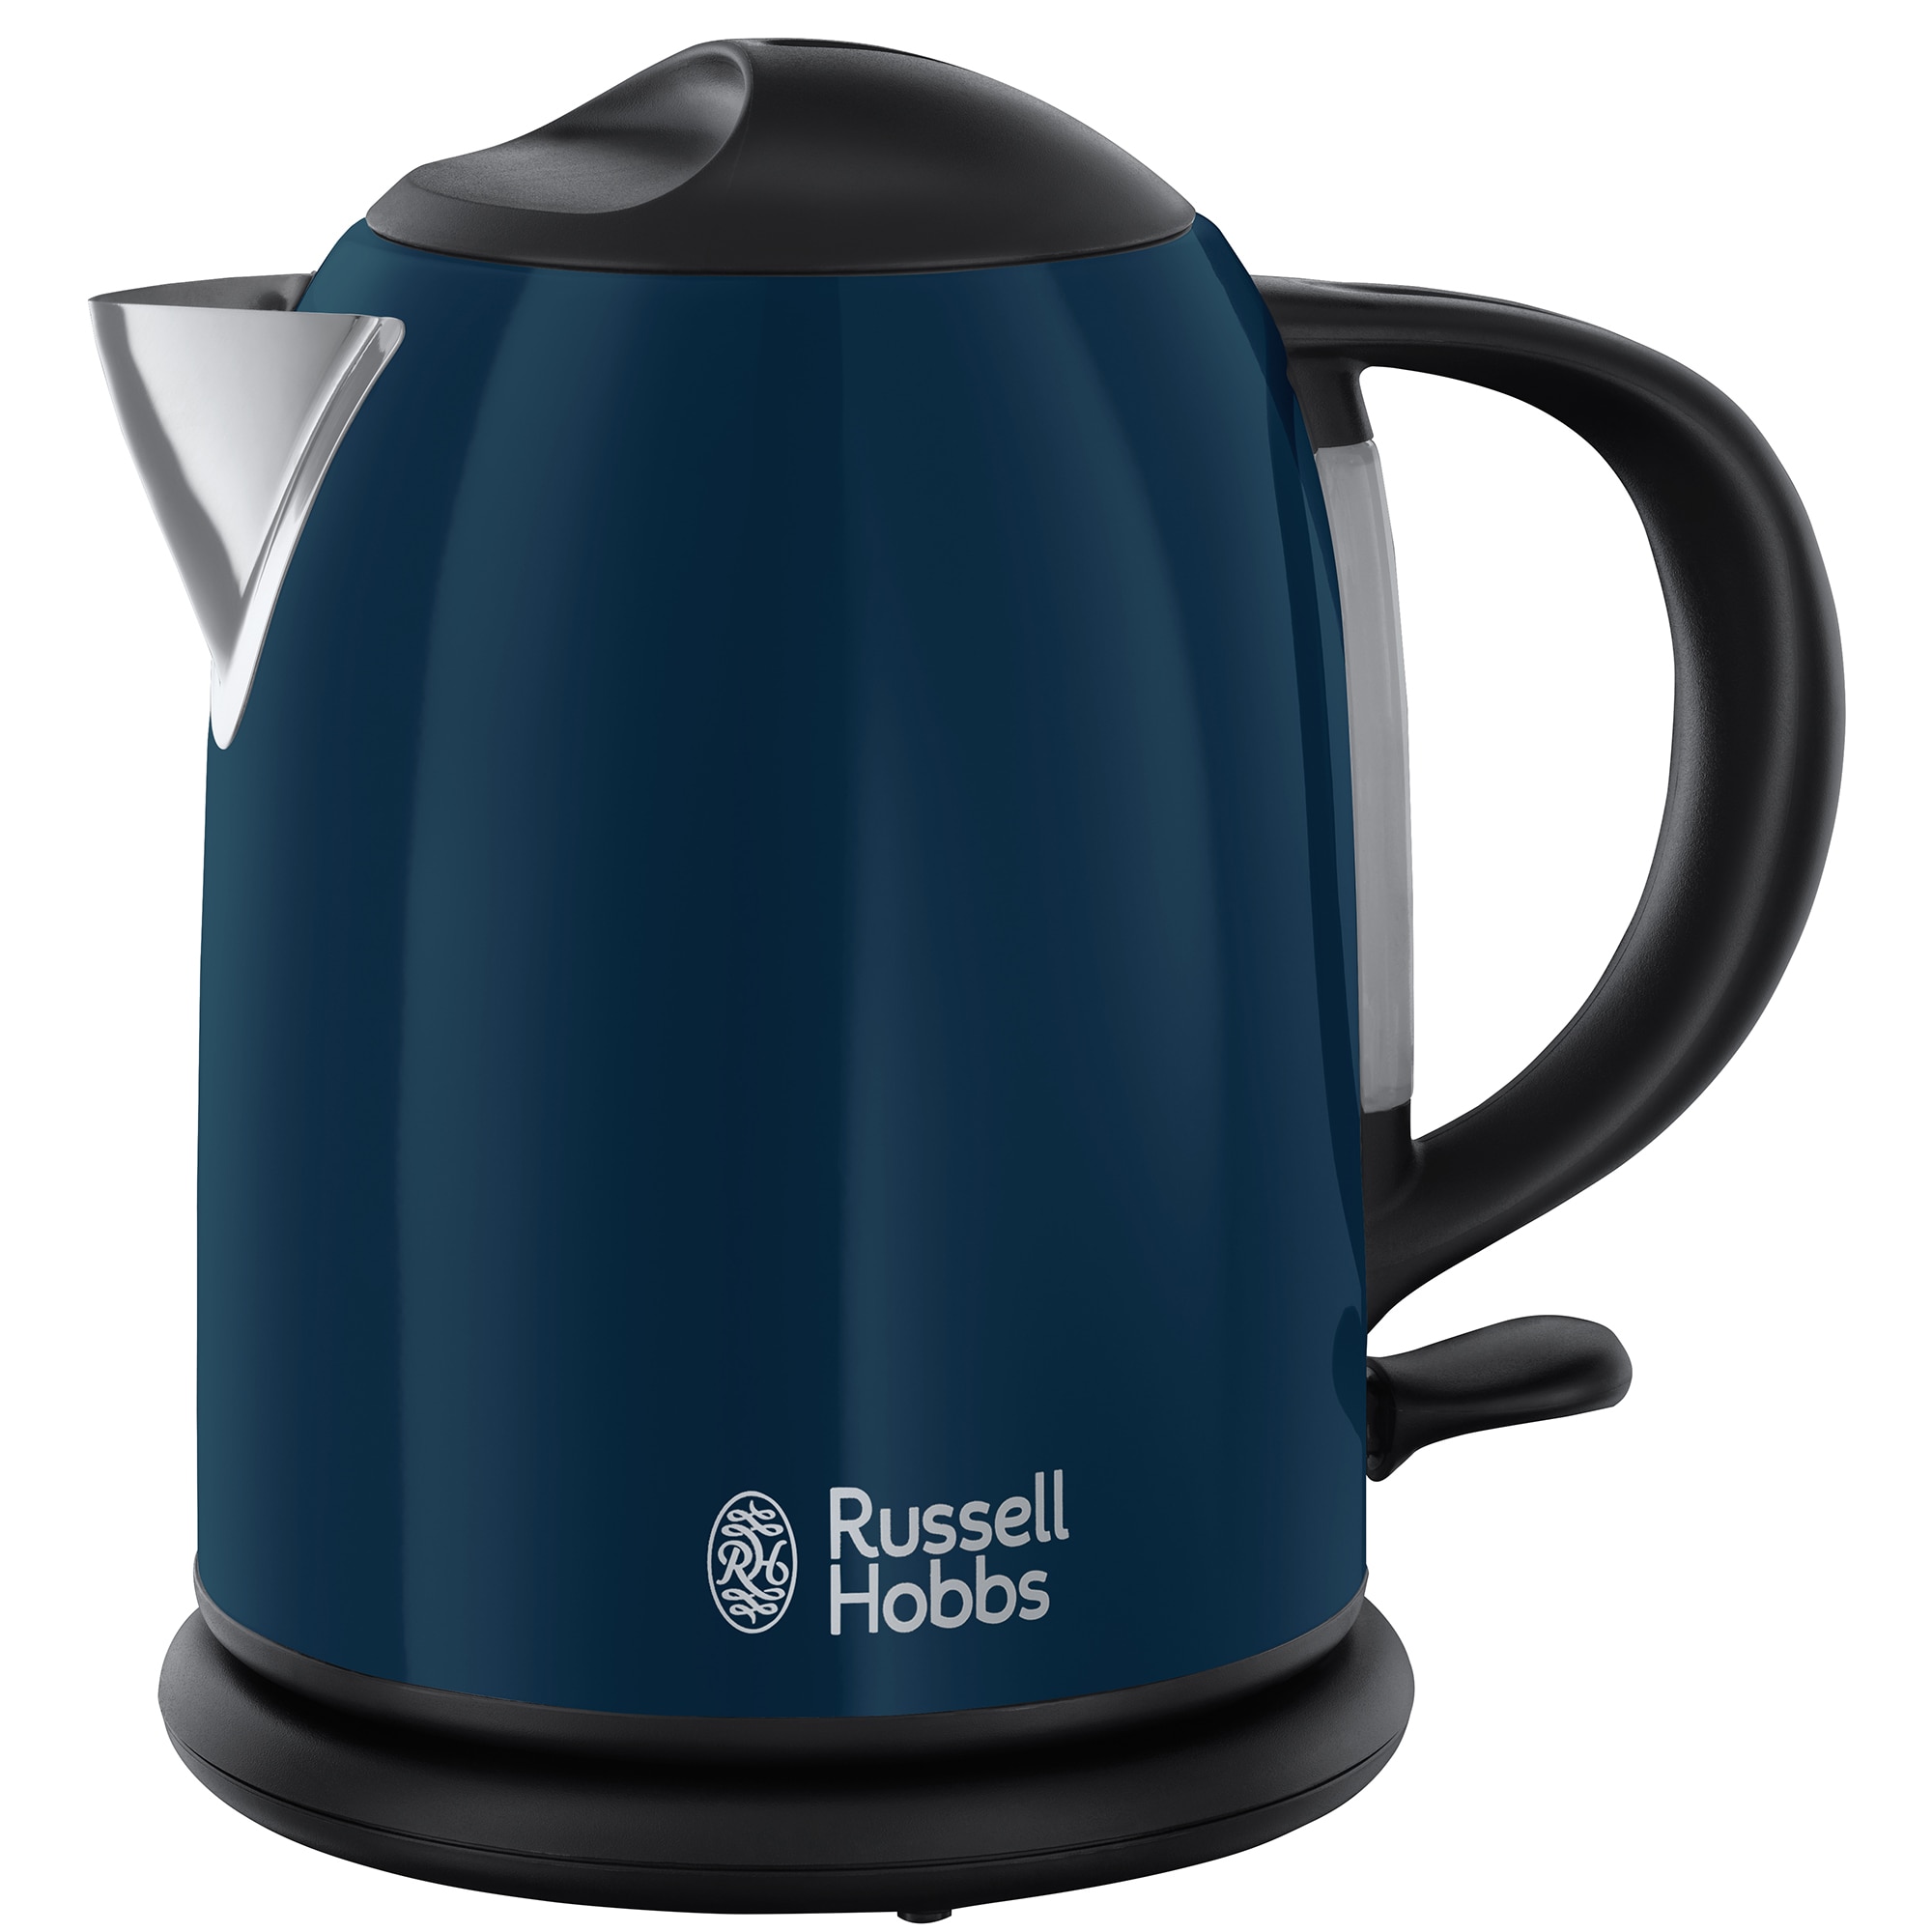 Russel Hobs Color Blue чайник. Электрочайник Russell Hobbs 24190-70 (Compact Home kettle).